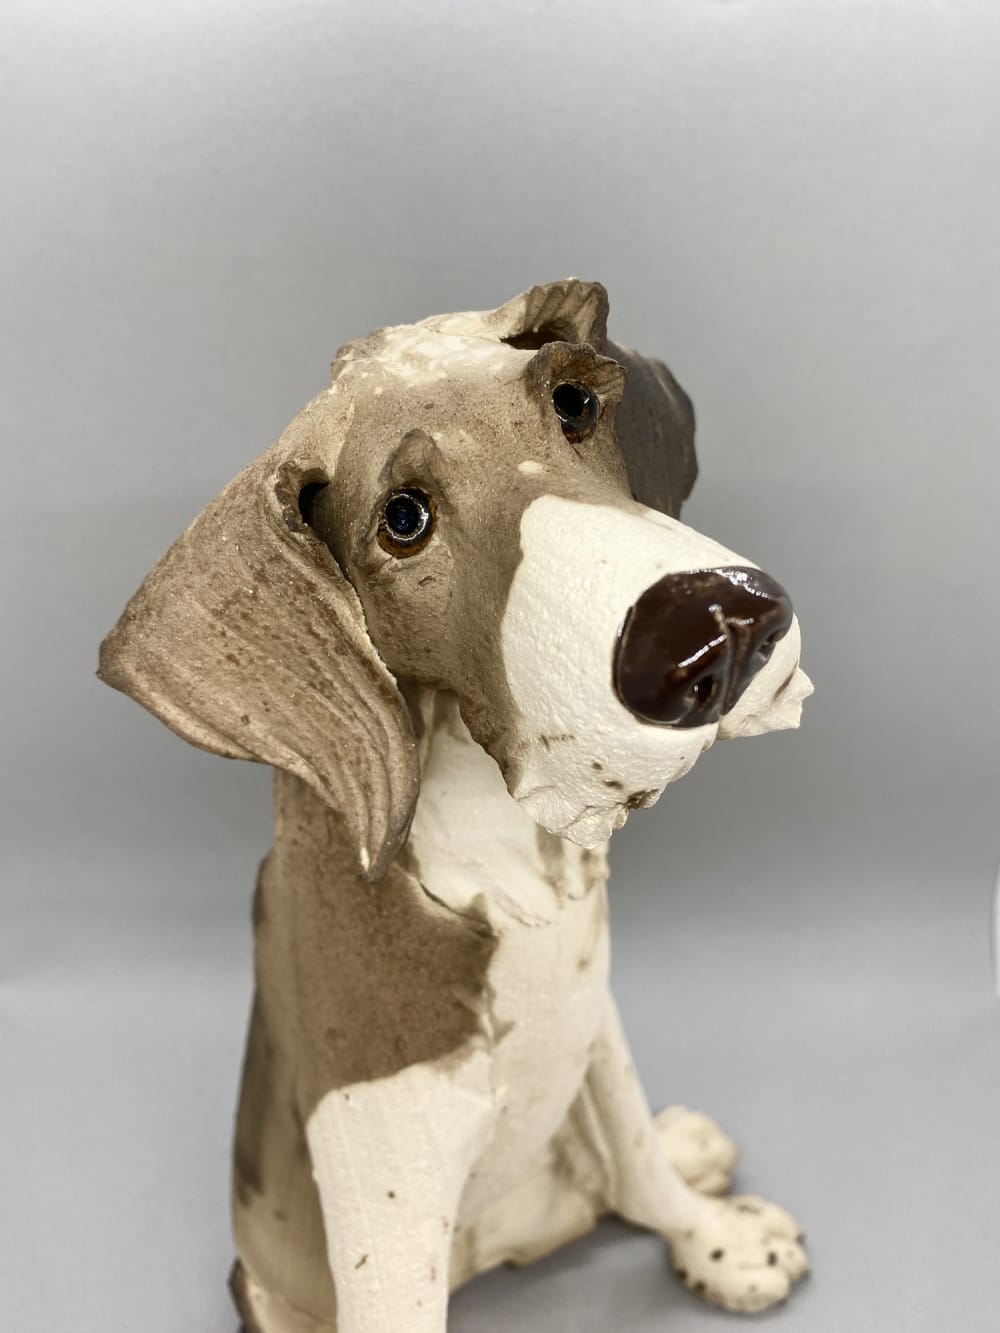 Virginia Dowe Edwards Raku smoked ceramic sculpture of a seated scruffy dog with a white tummy